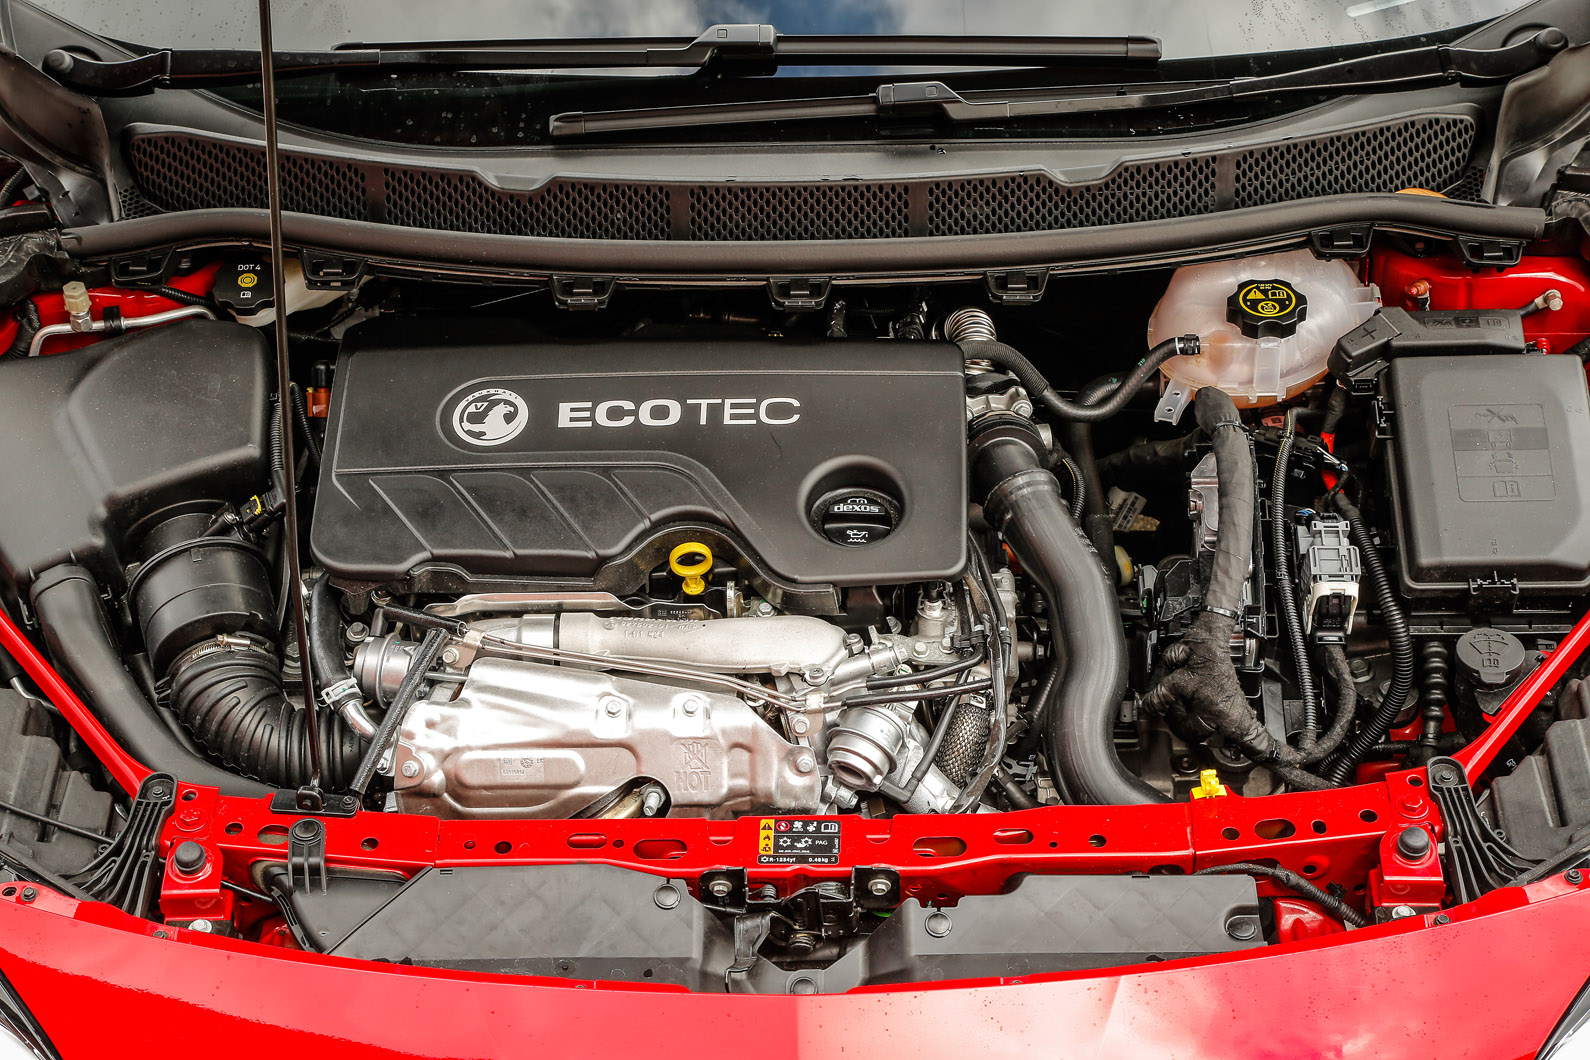 1.6-litre bi-turbo Vauxhall Astra diesel engine